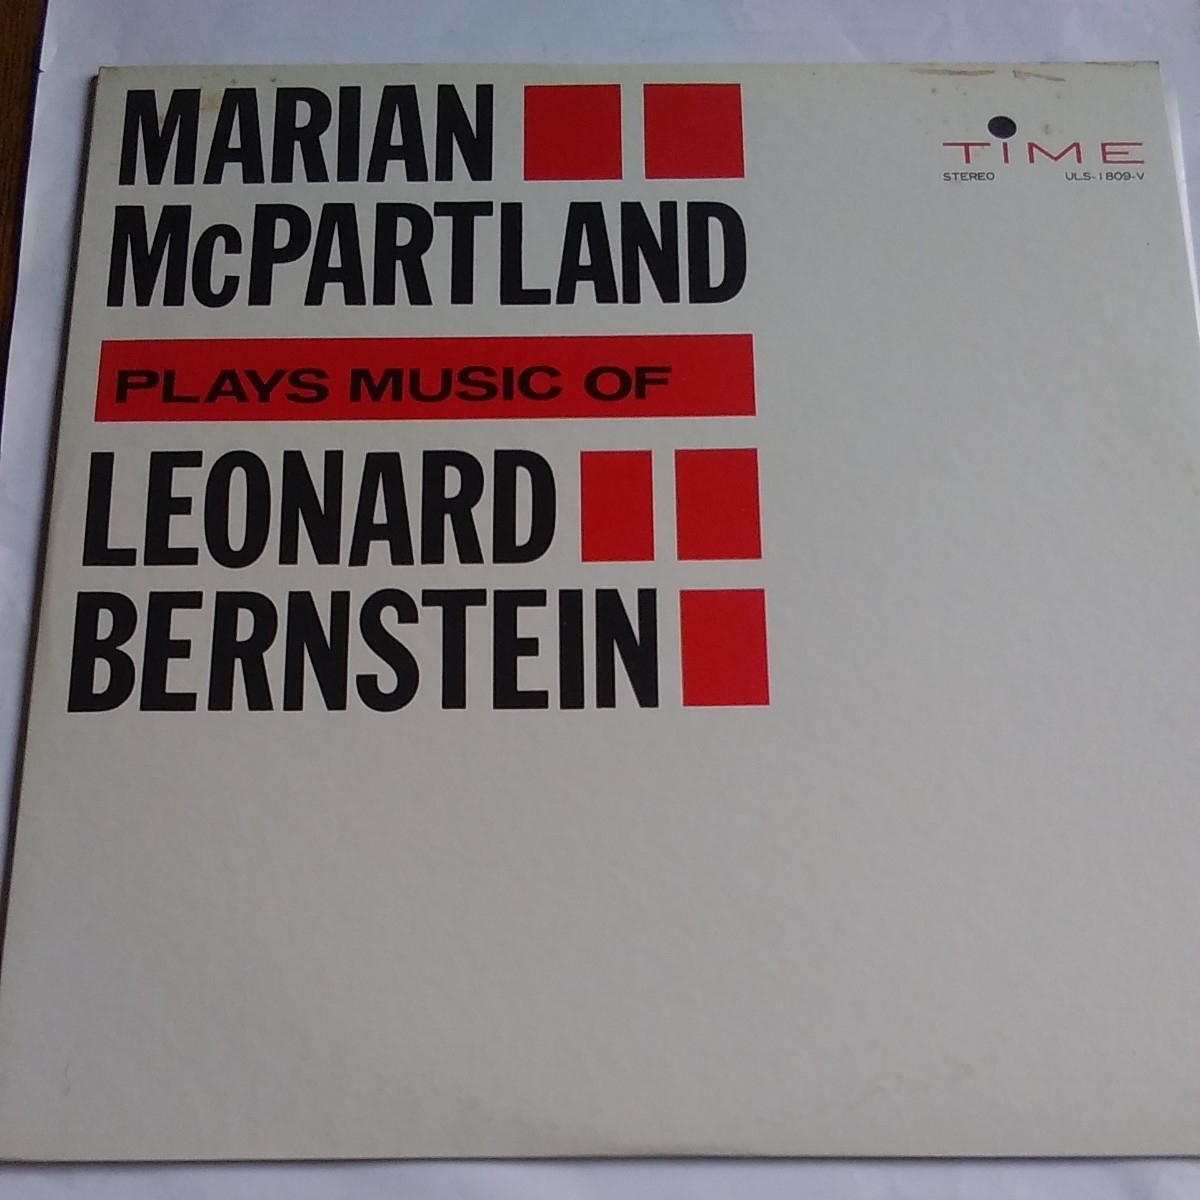 MARIAN McPARTLAND PLAYS MUSIC OF LEONARD BERNSTEIN TIME STEREO ULS-1809-V タイム・オリジナル・コレクション1800_画像1